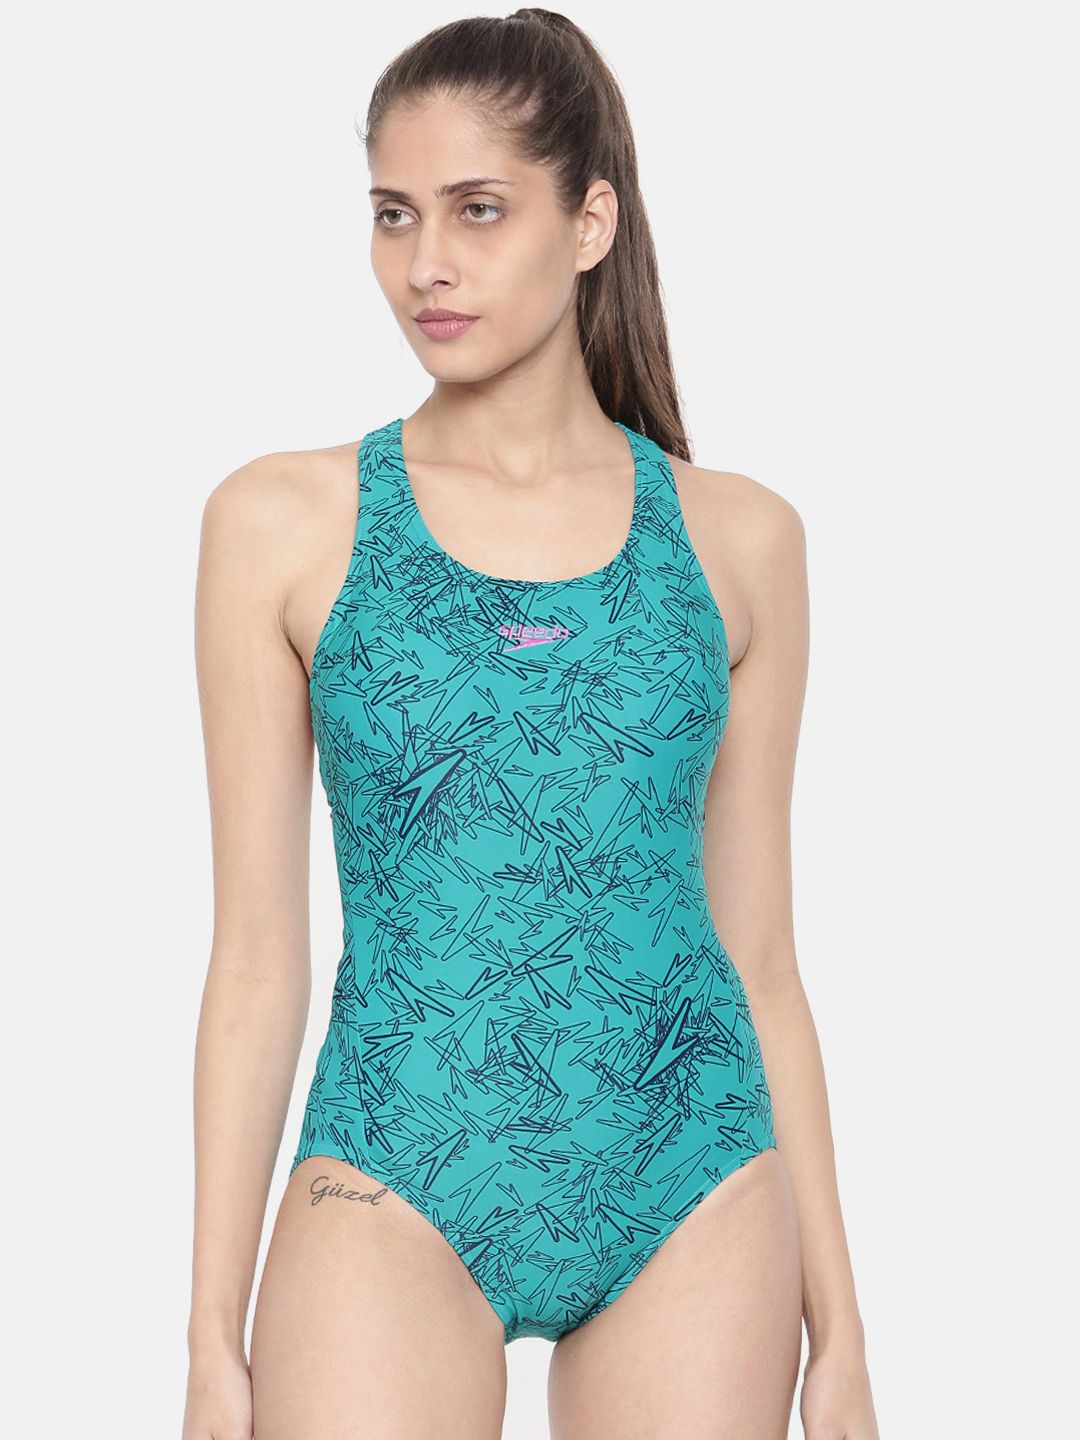 Speedo Women Teal Green Printed Bodysuit 8FS818B353 Price in India